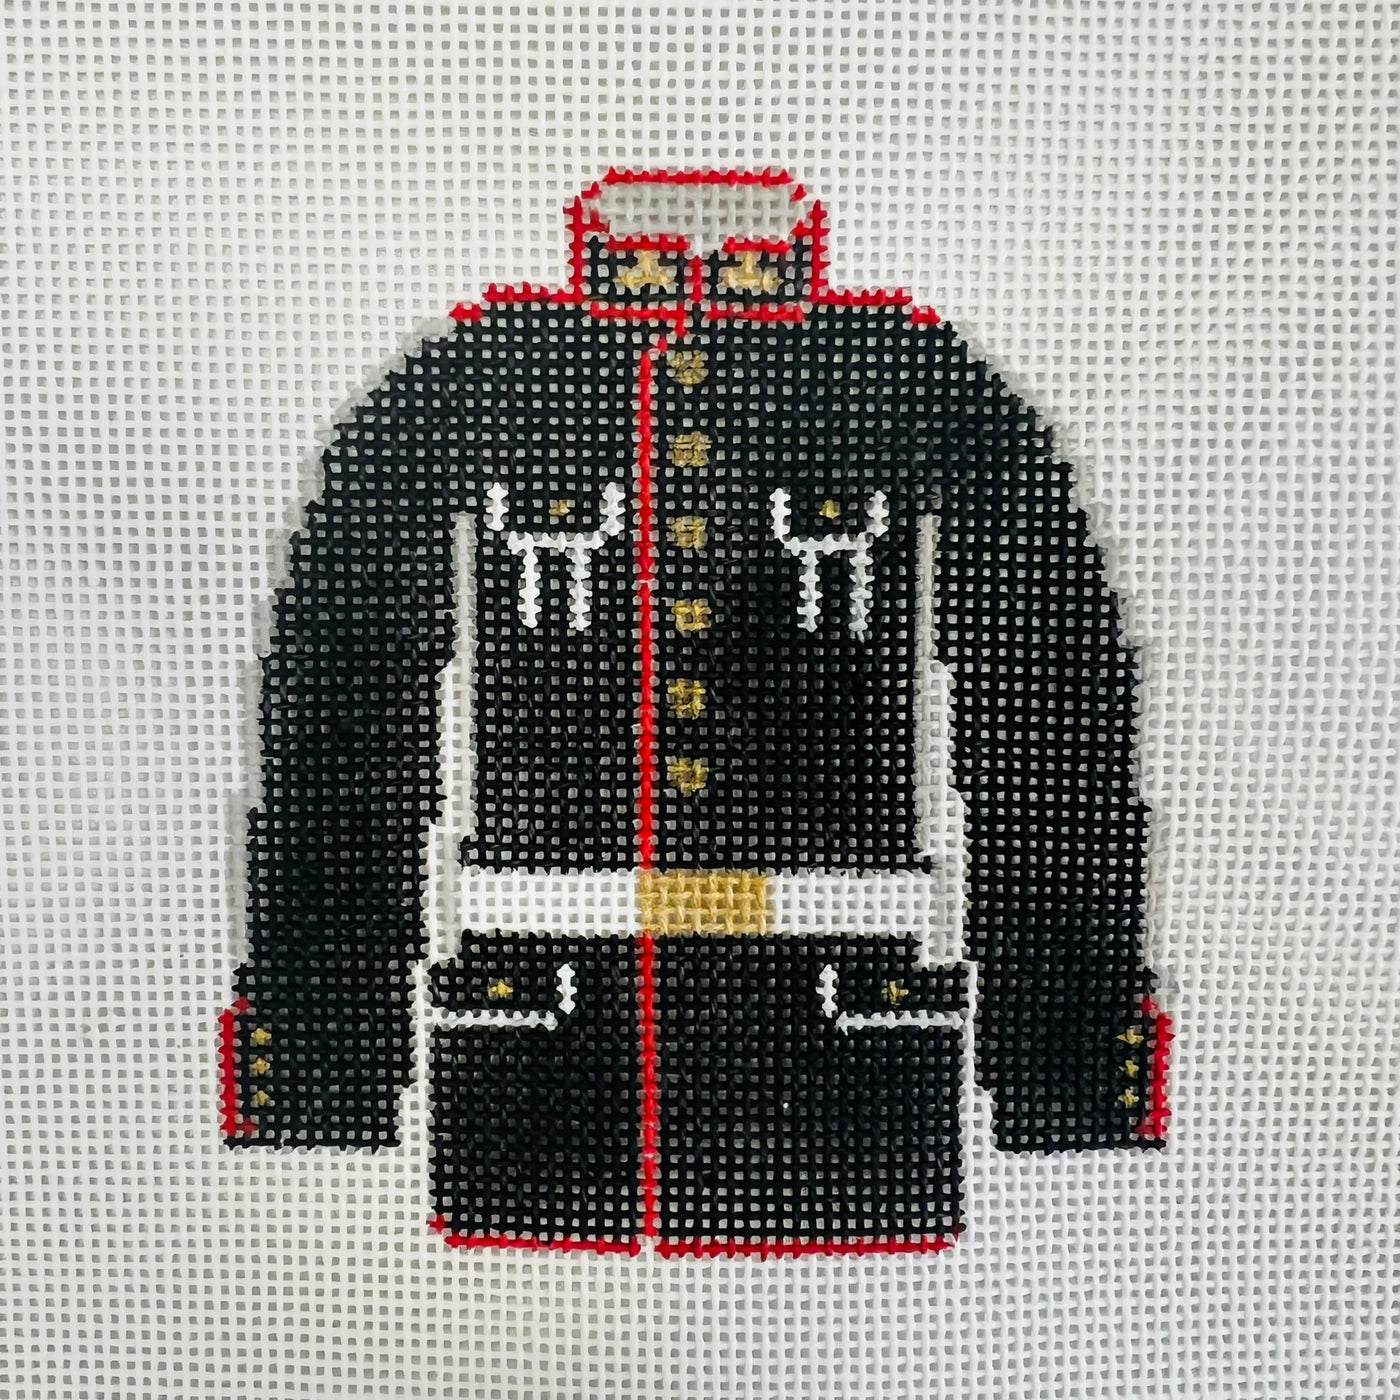 Marine Corps Dress Uniform Ornament Needlepoint Canvas